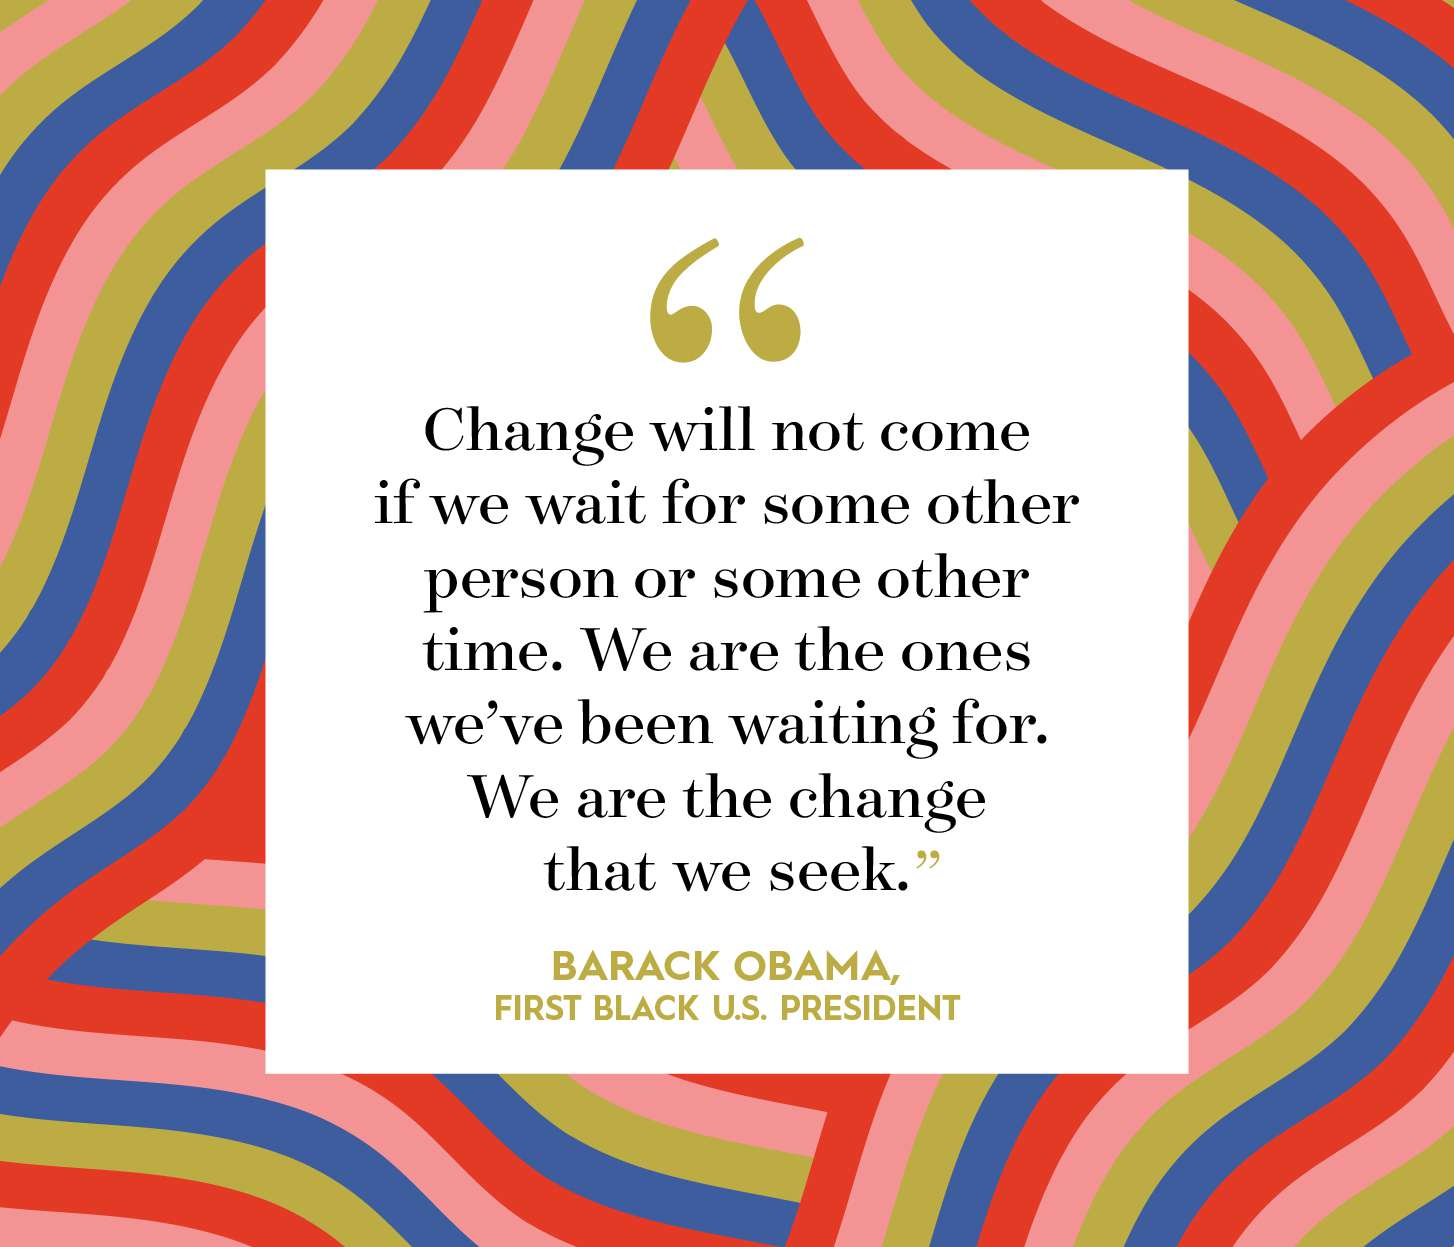 barack obama quote on multicolor background